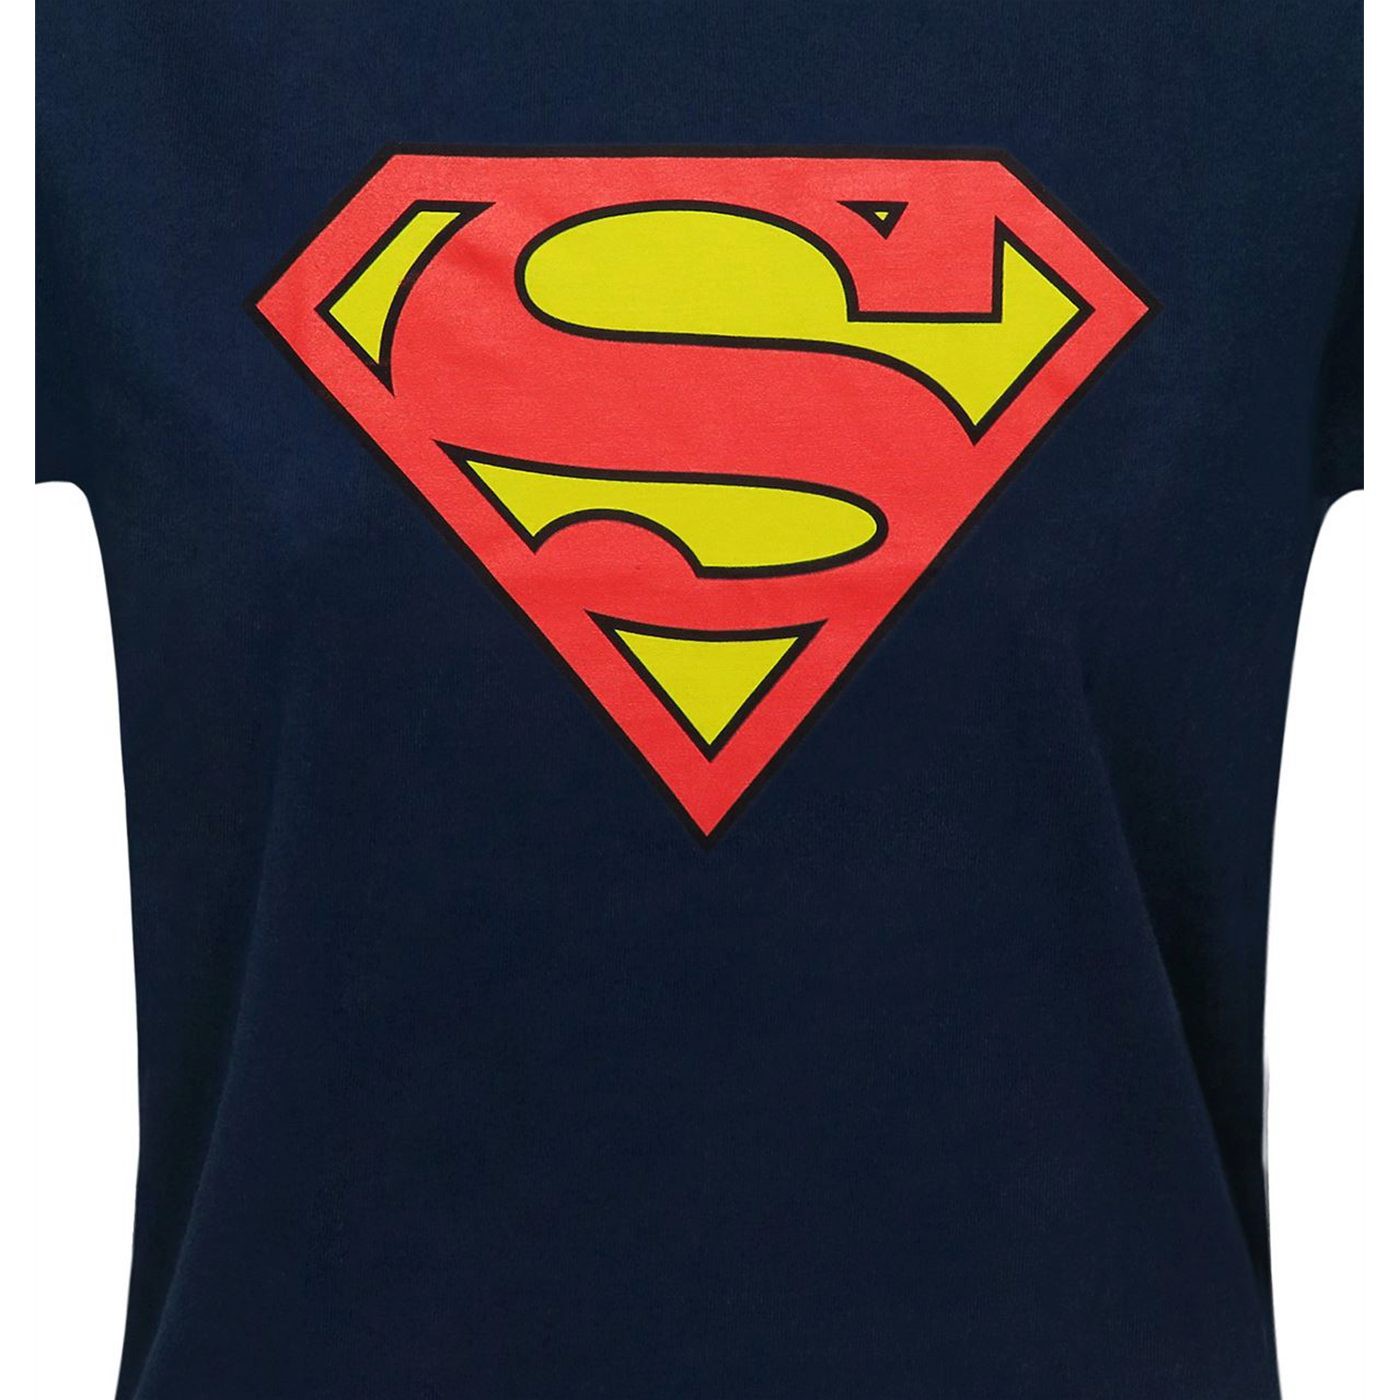 Superman Symbol Women's Navy T-Shirt